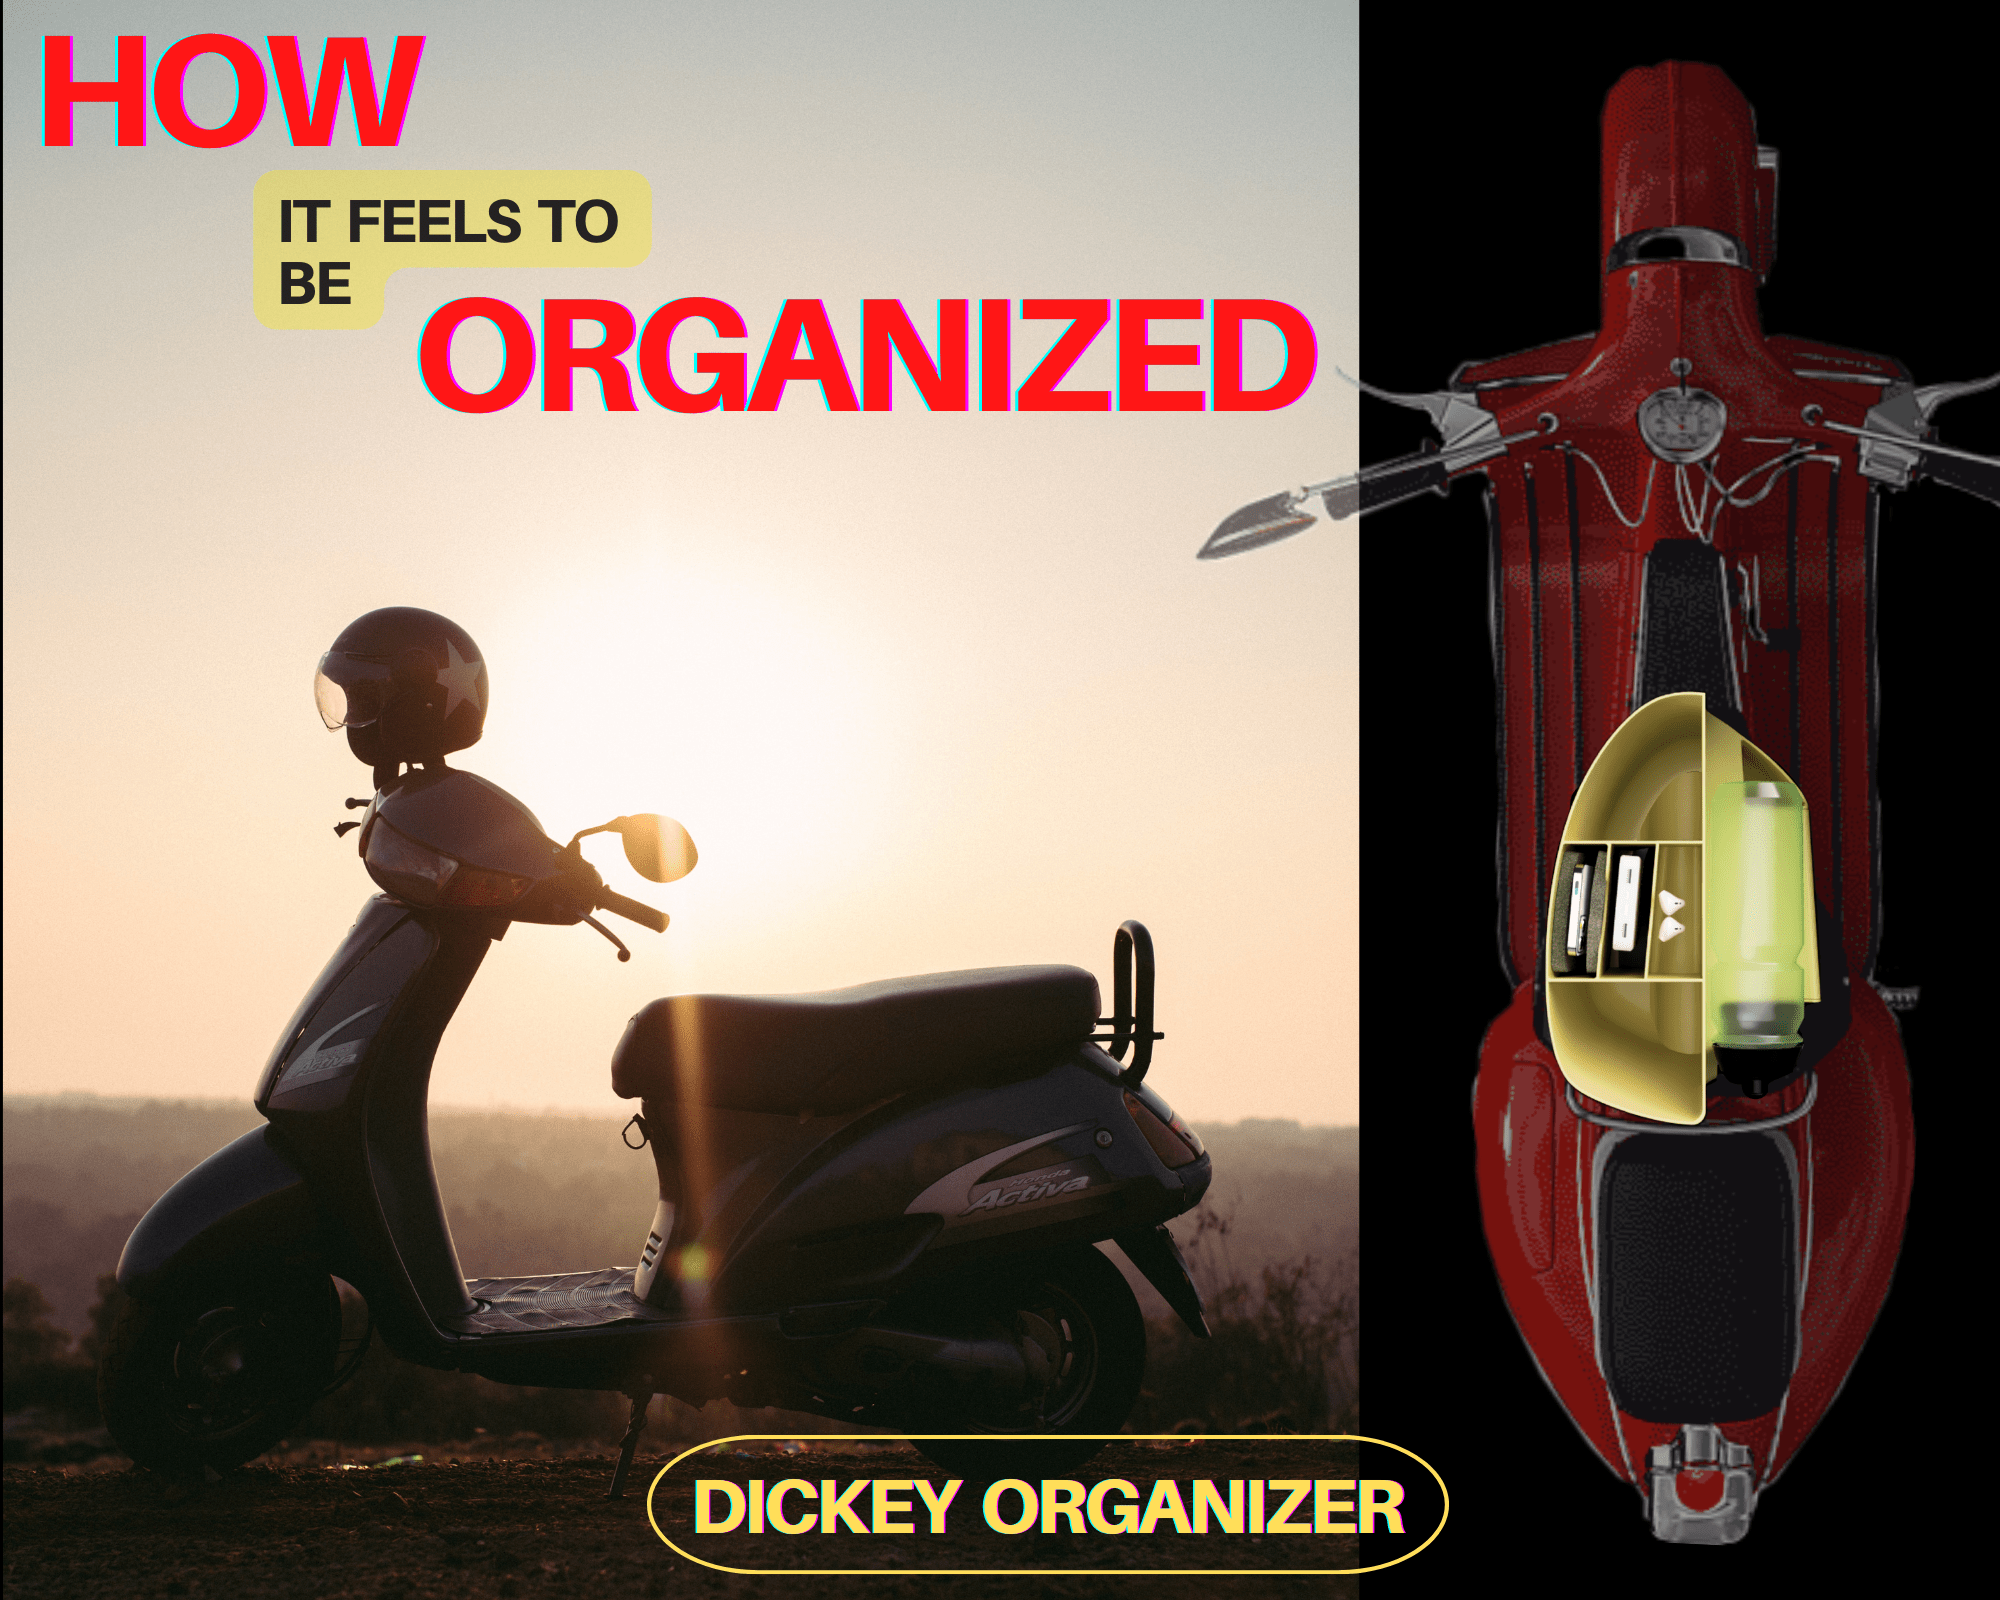 The Dickey Organizer